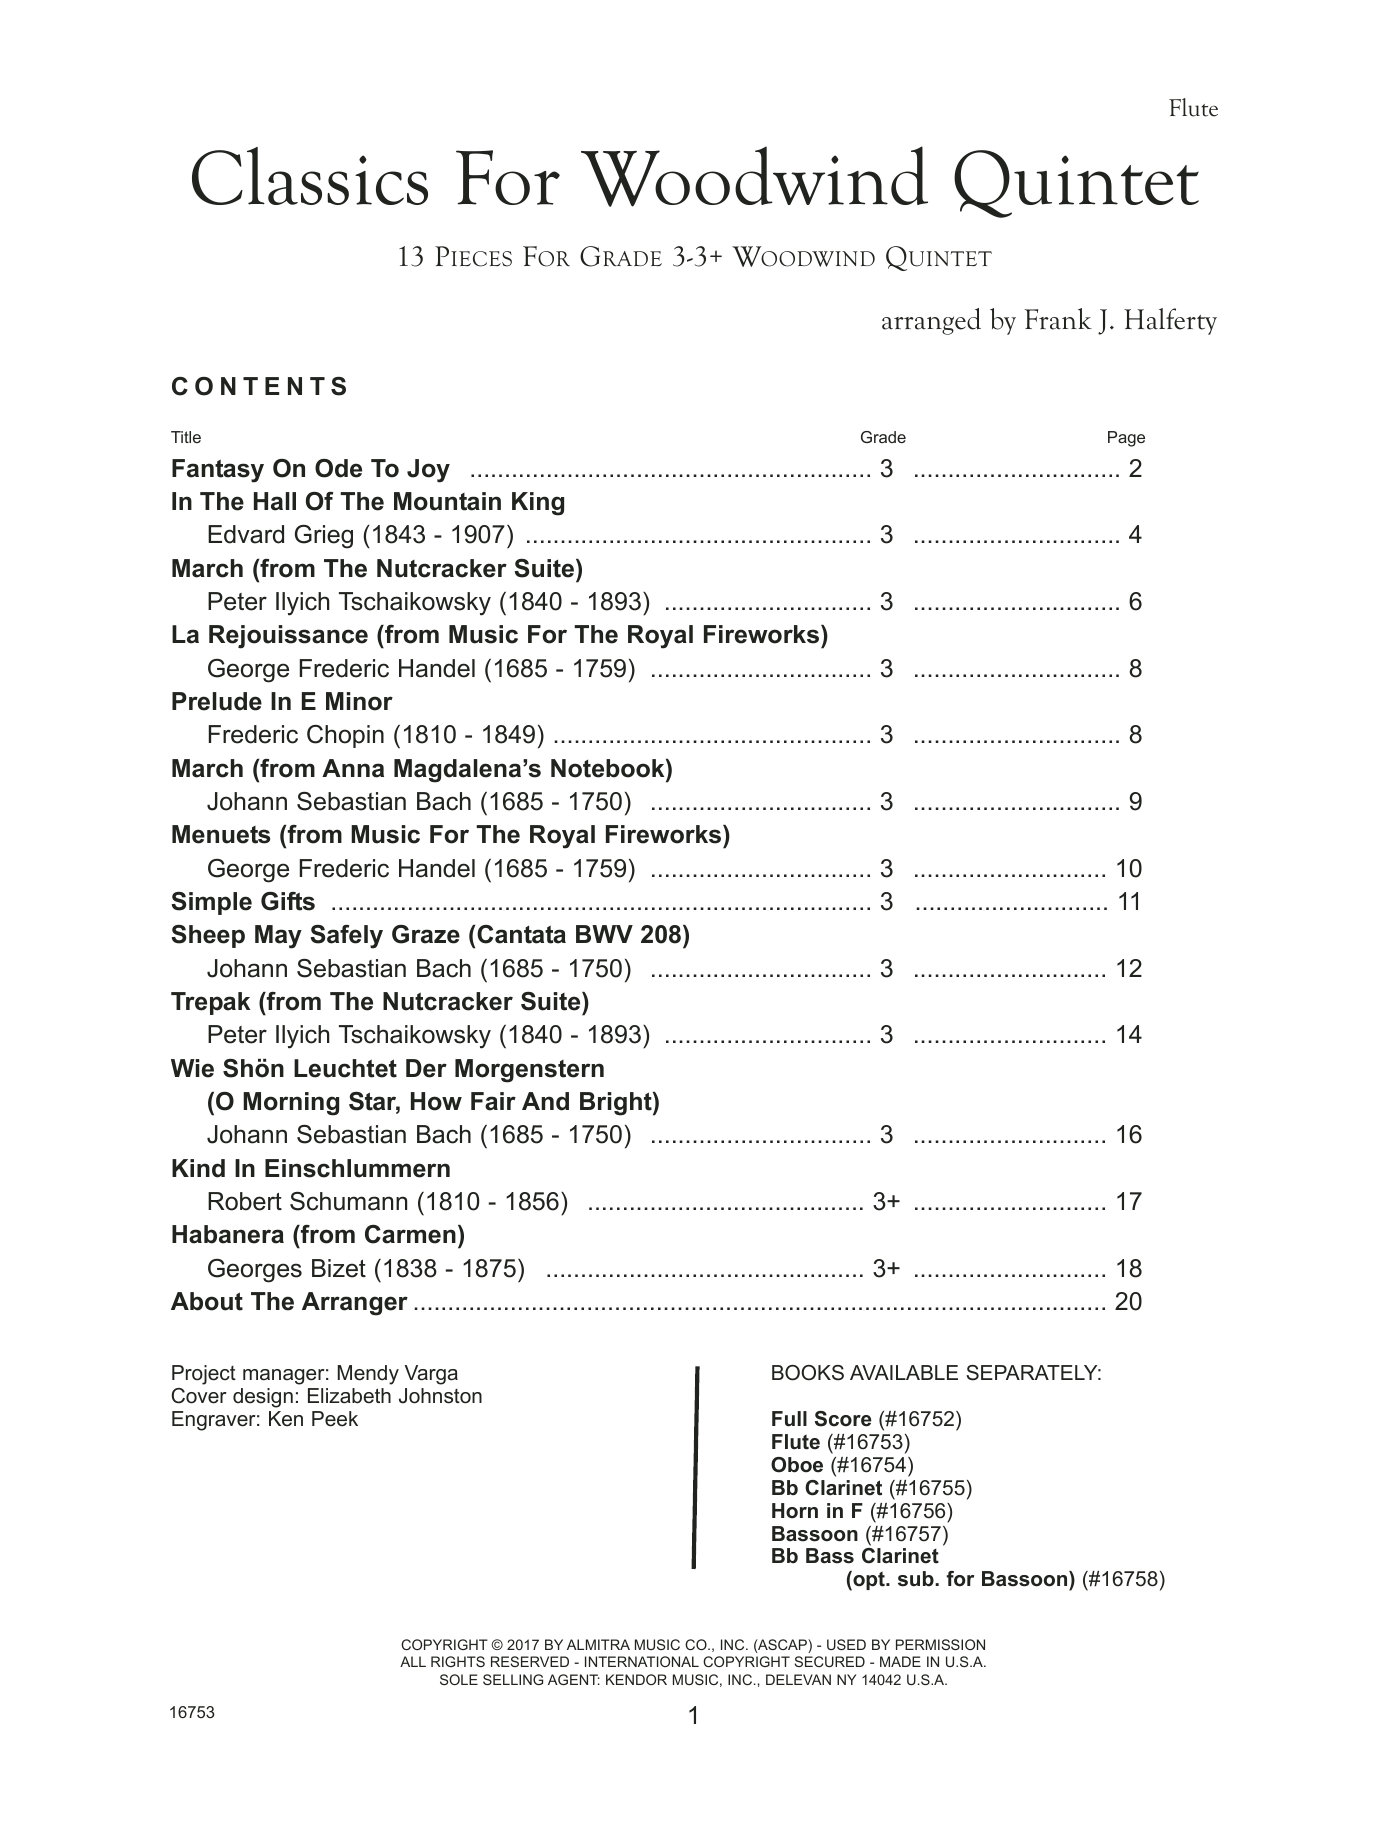 Download Frank J. Halferty Classics For Woodwind Quintet - Flute Sheet Music